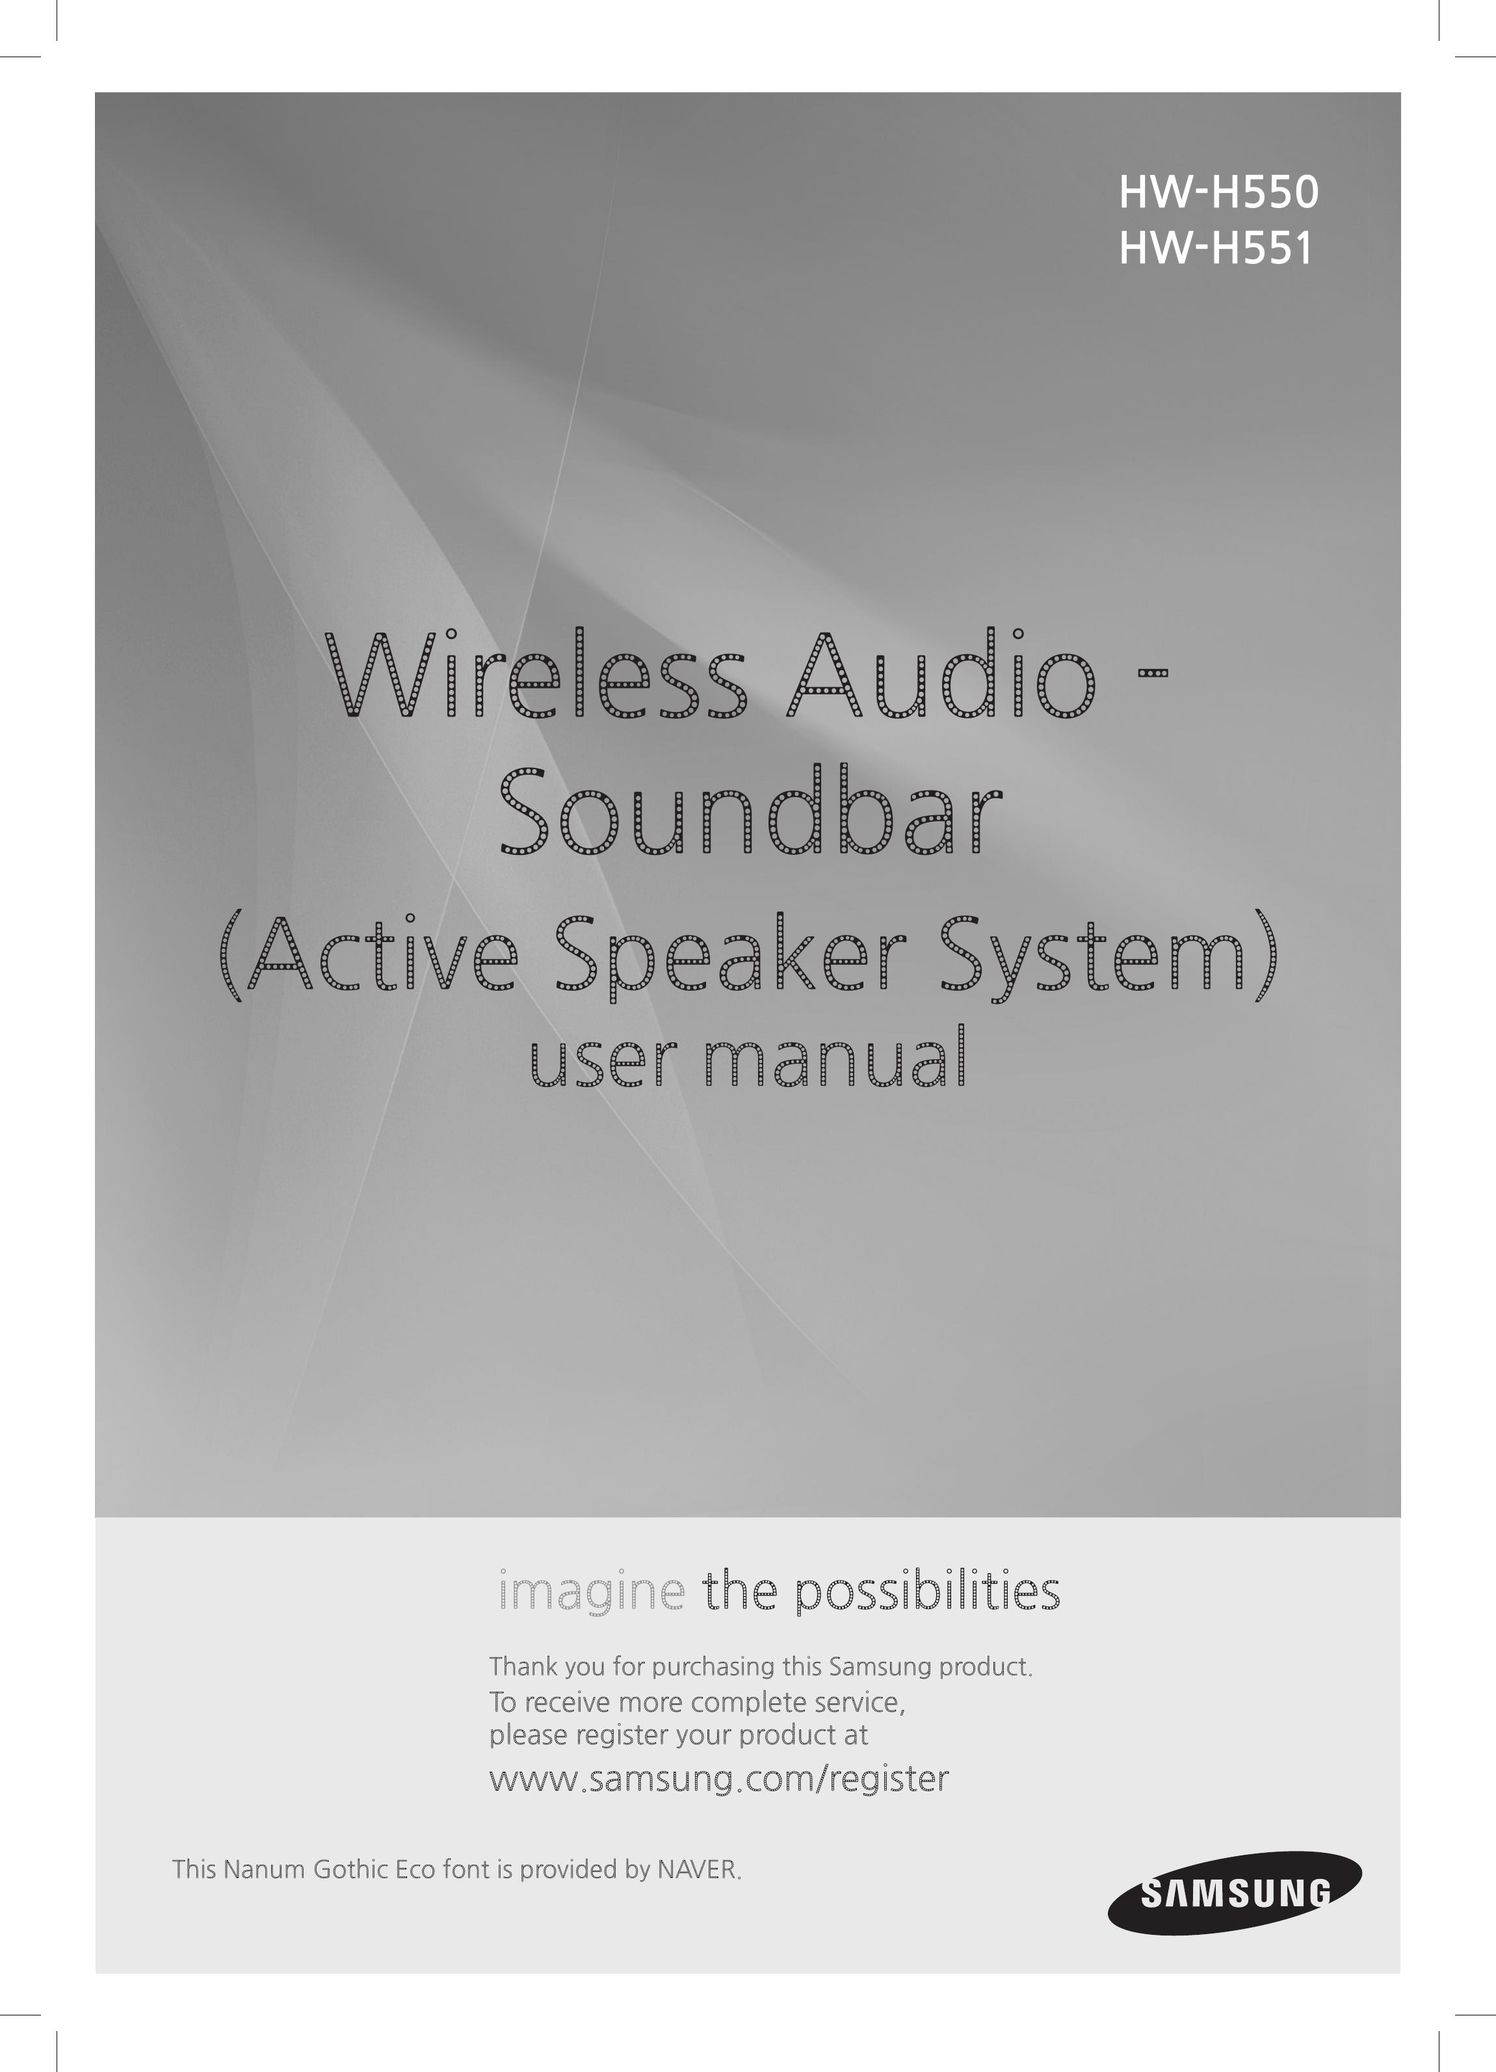 Samsung HWH551 Speaker System User Manual